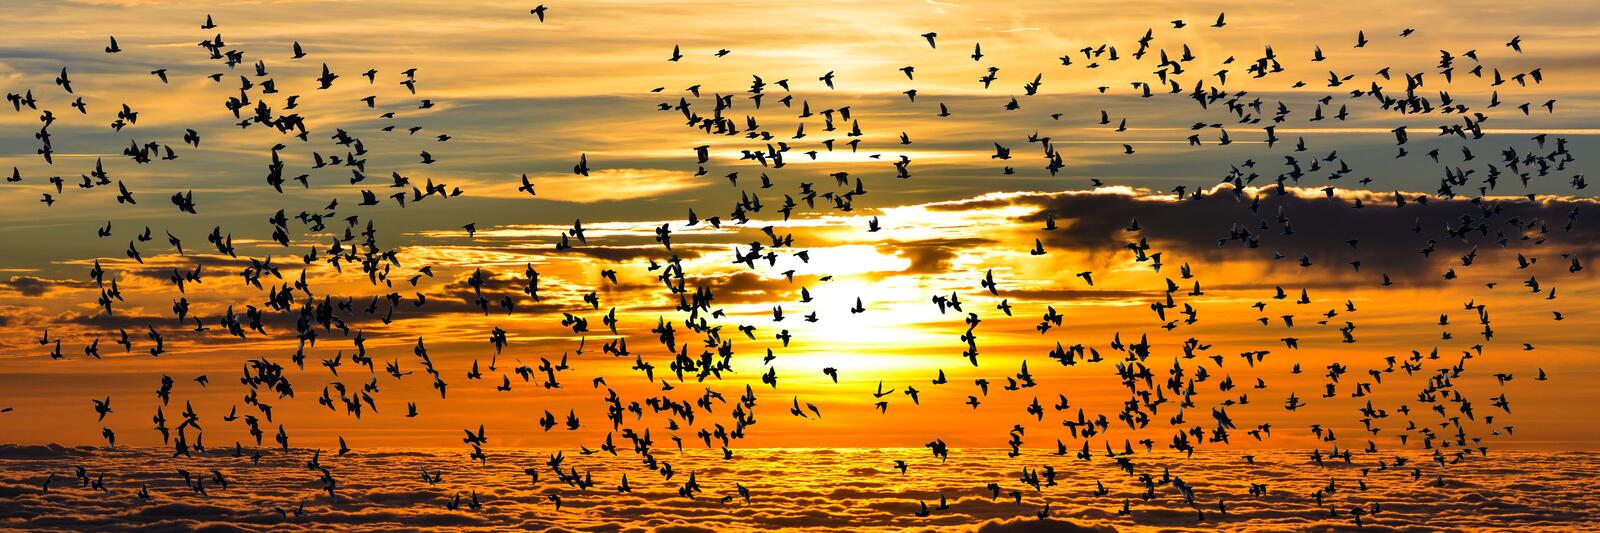 Wallpapers sunset birds fly on the desktop